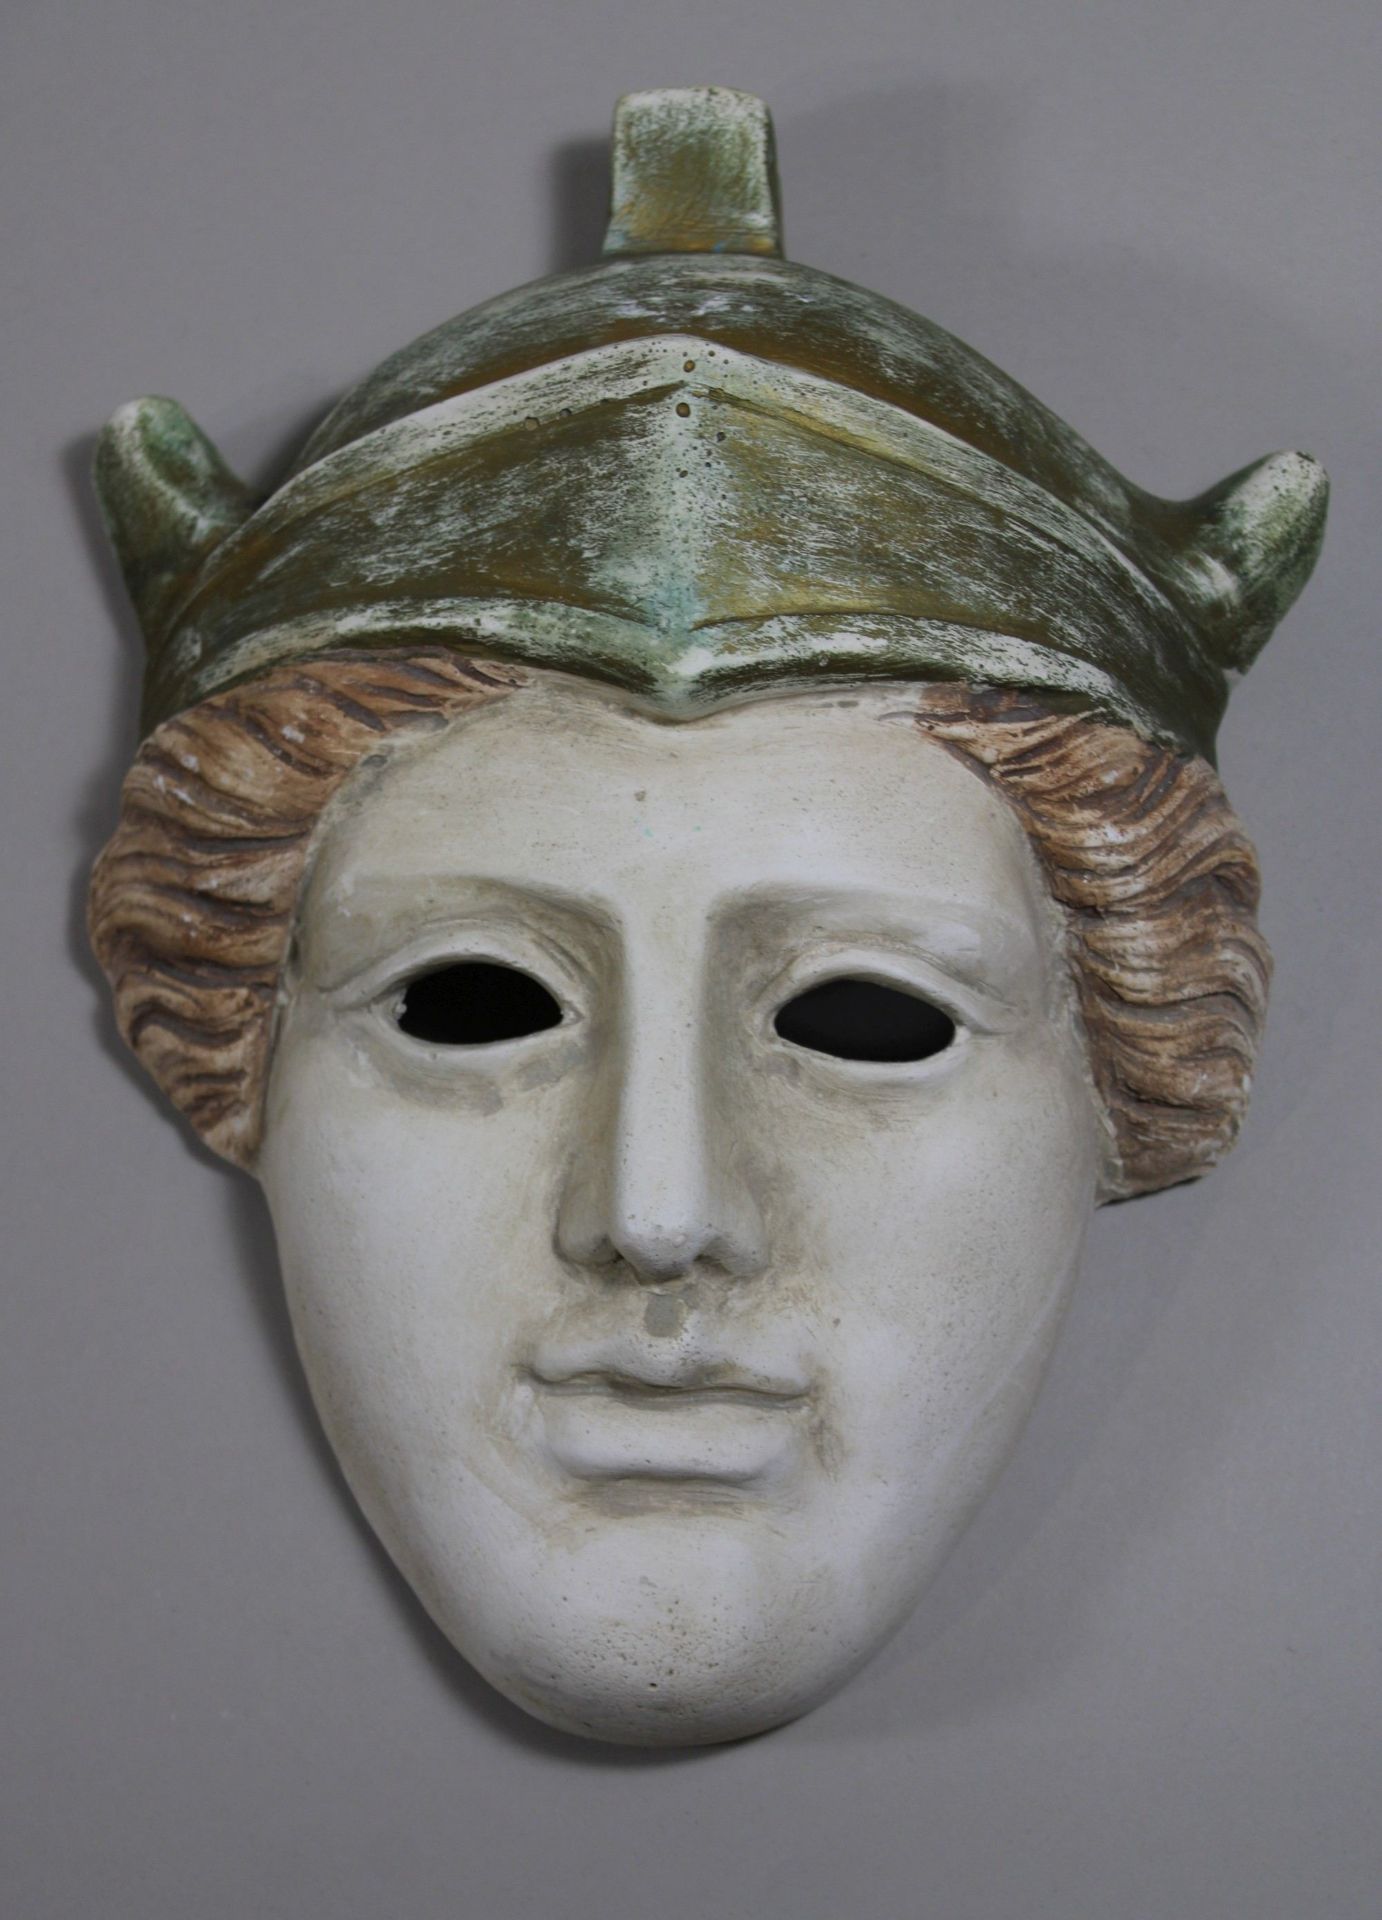 Griechische Theatermasken 4 Tl., Keramik, Griechenland, 20. Jh., H.: 27 cm. Guter, altersbedingter - Image 7 of 7